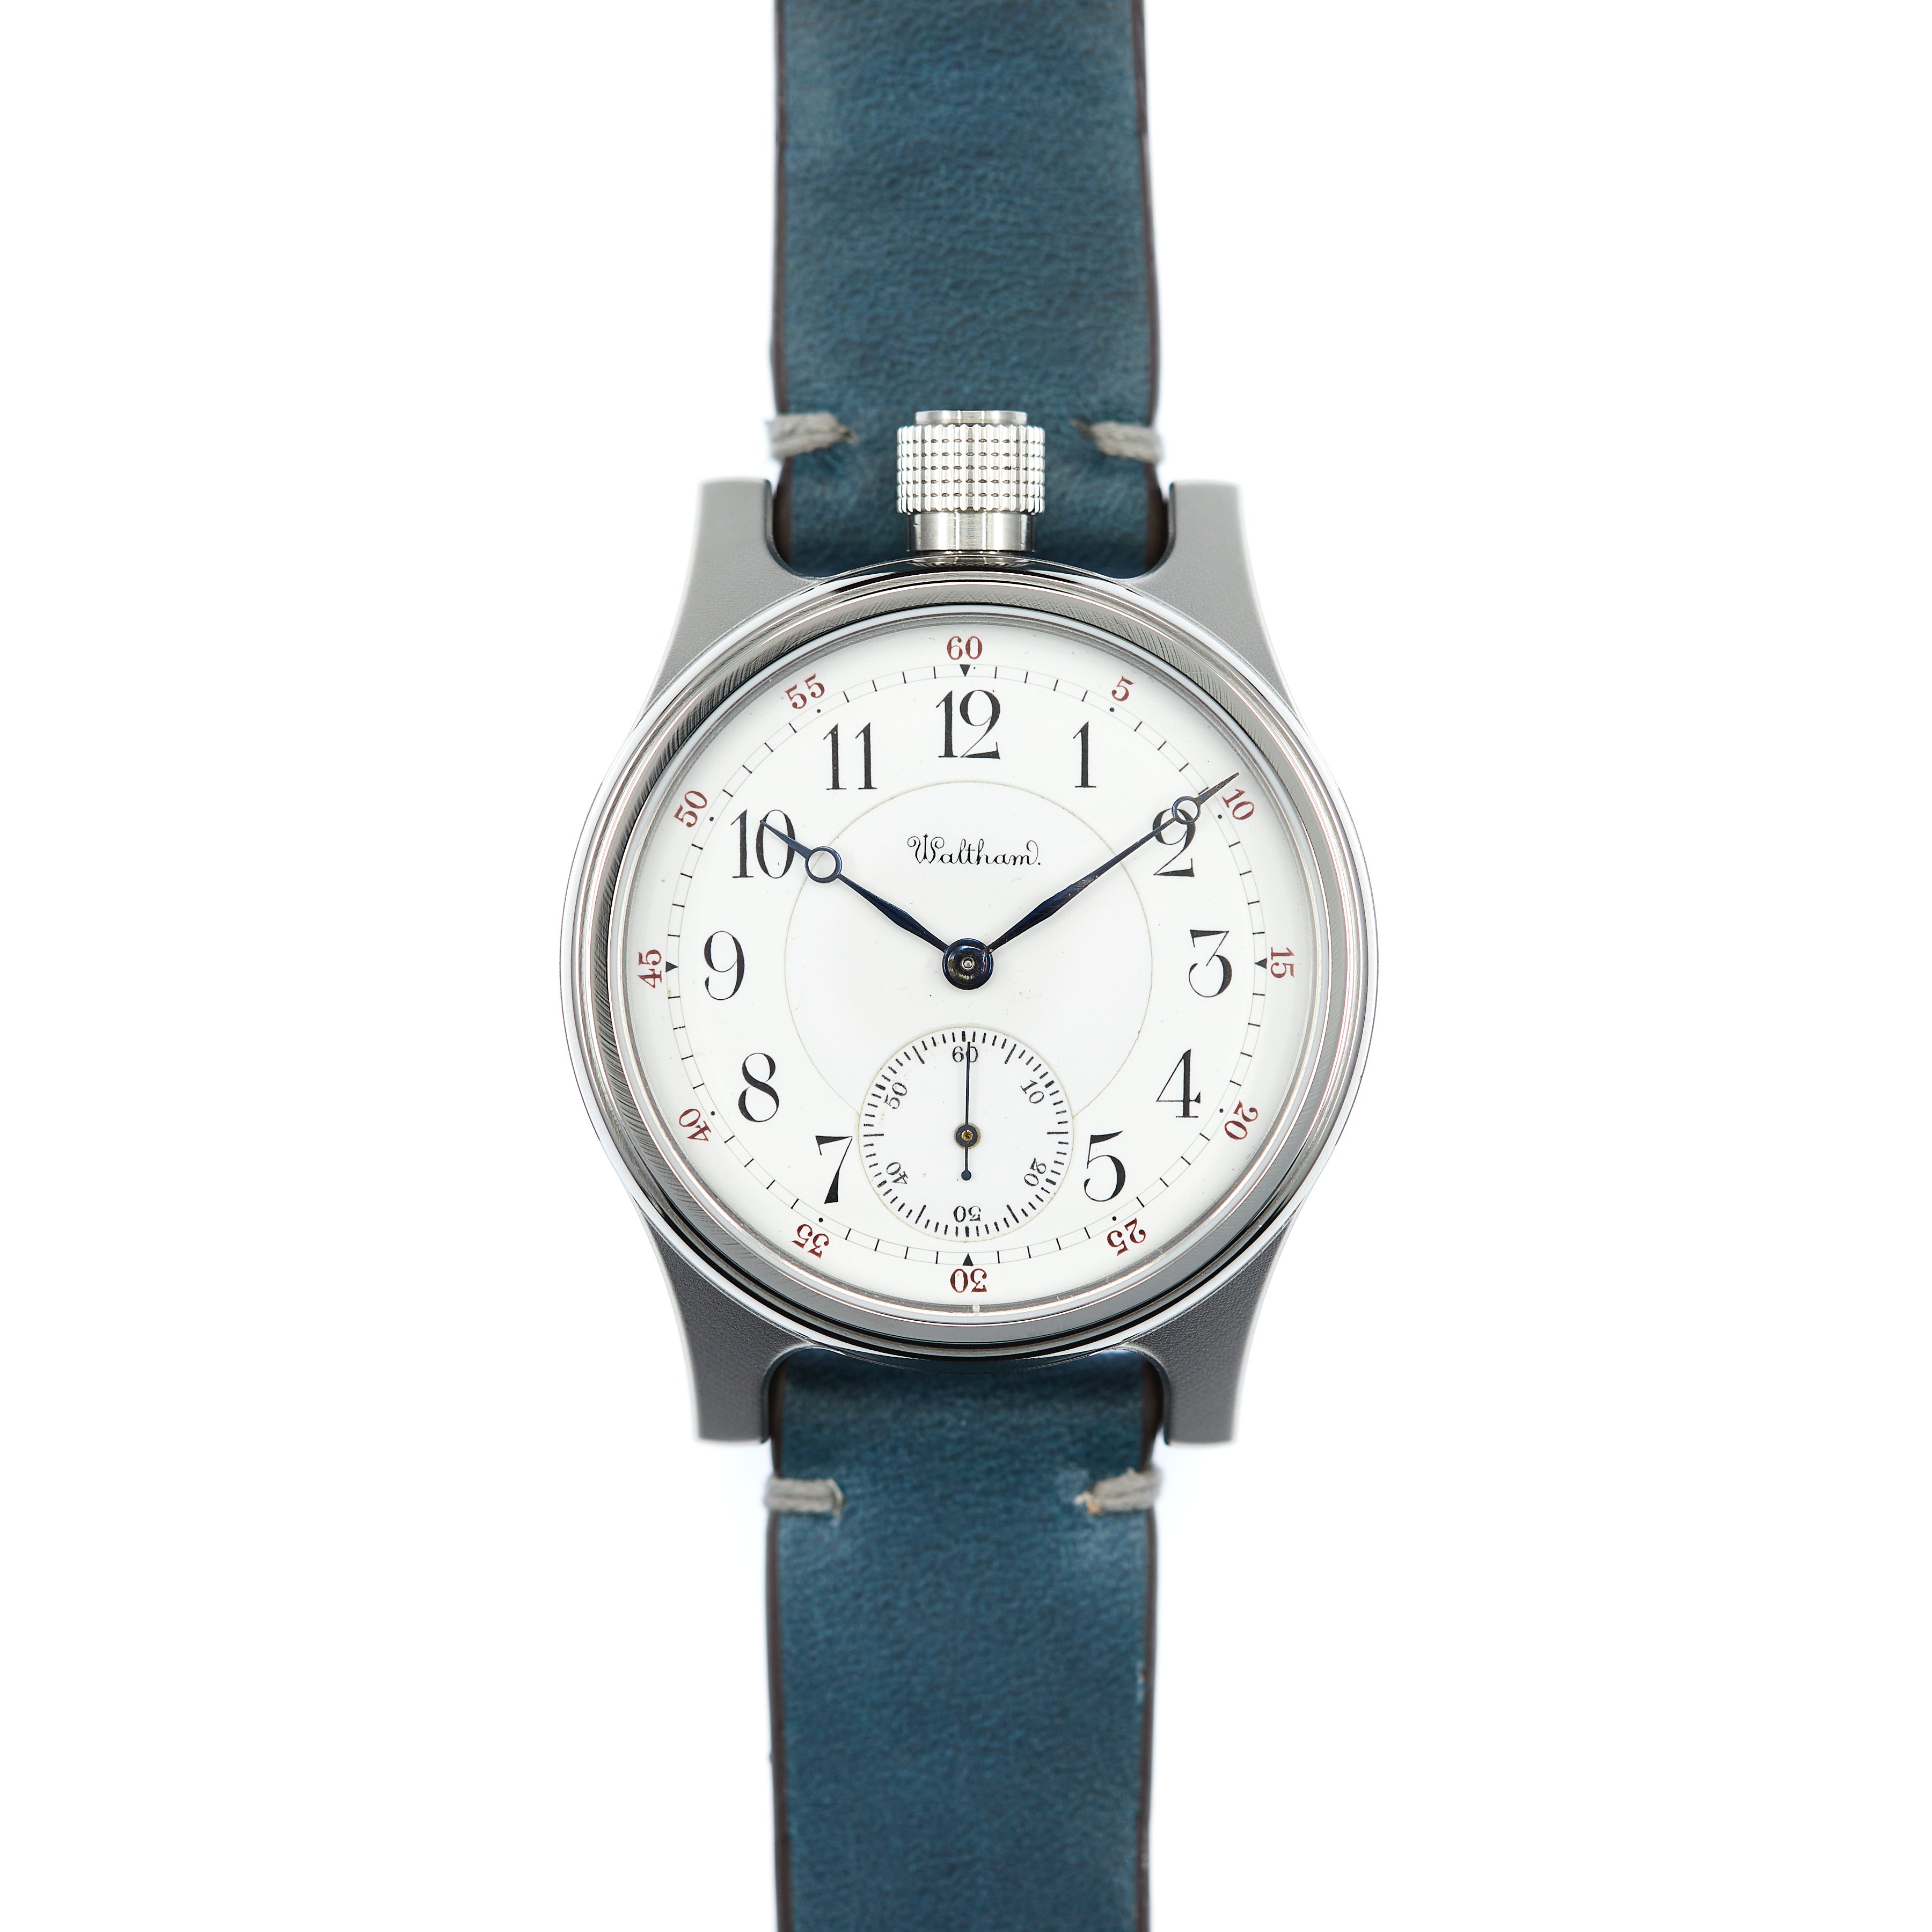 Elgin 12s Pocket Marriage Watch Conversion 44mm SS Wrist Watch 1922  Movement | eBay